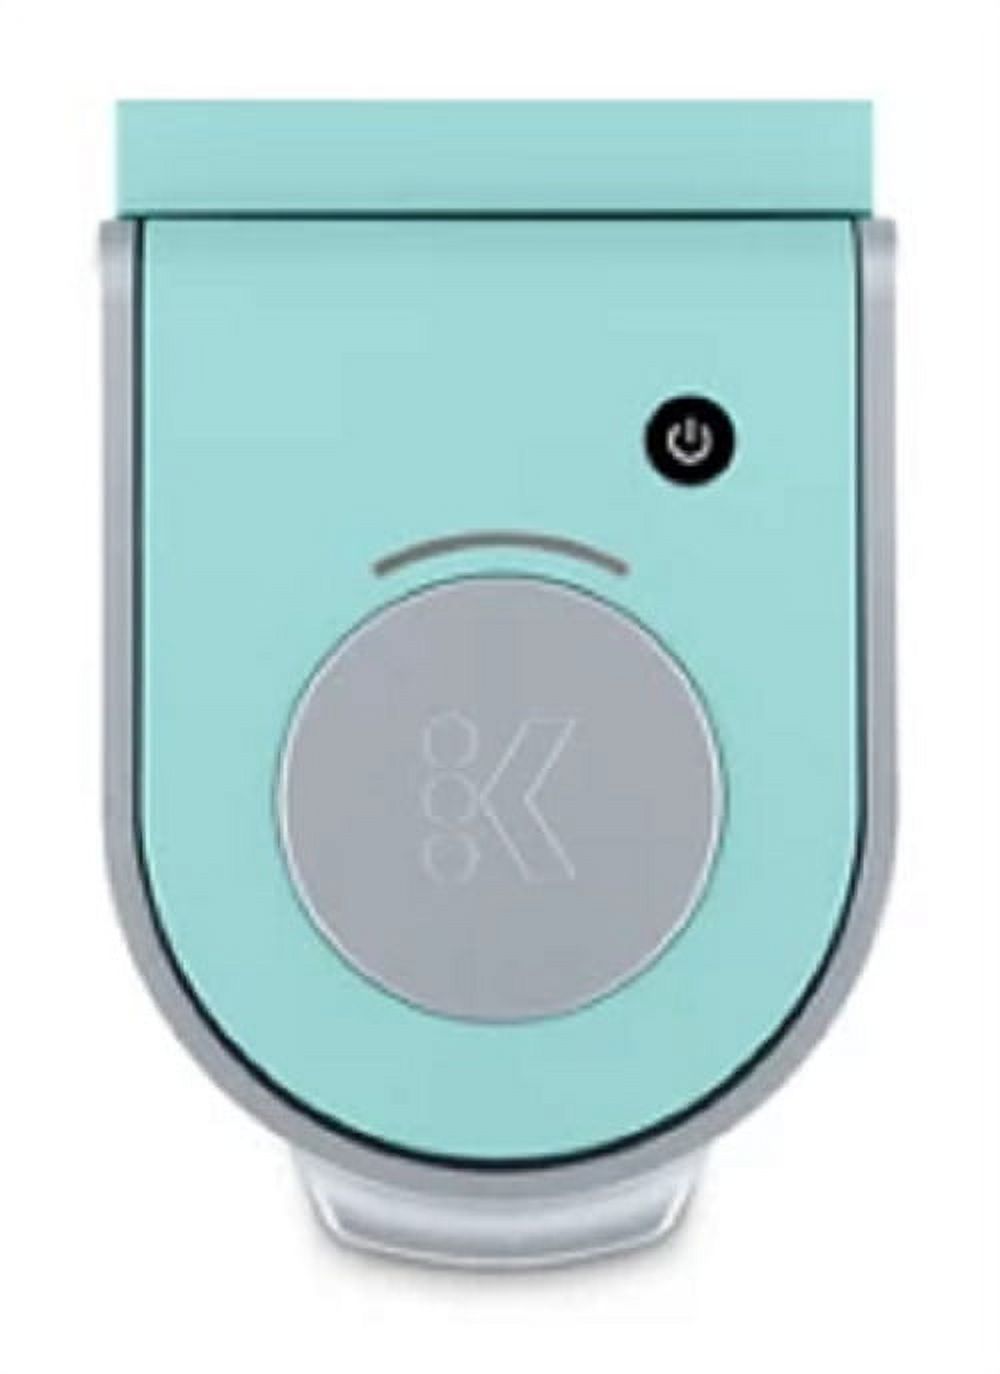 Keurig K-Mini Single Serve Coffee Maker (Oasis) with Stainless Steel Tumbler - image 4 of 6